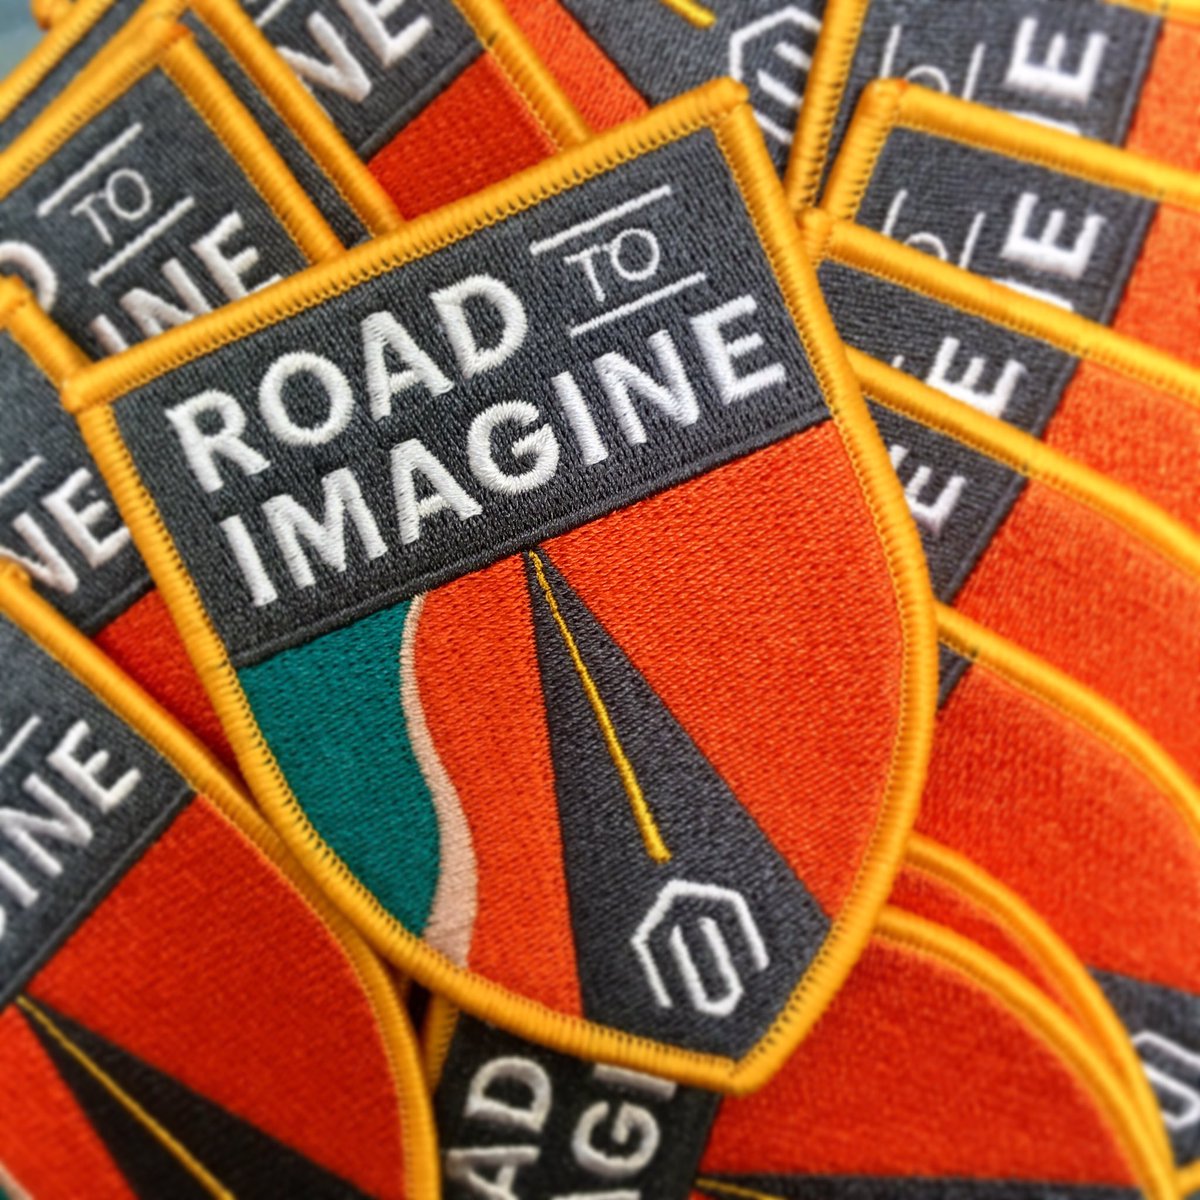 jenuhleez: We're one week away!!! Can't wait! @magento #MagentoImagine #RoadtoImagine https://t.co/mlhUY2vi8b